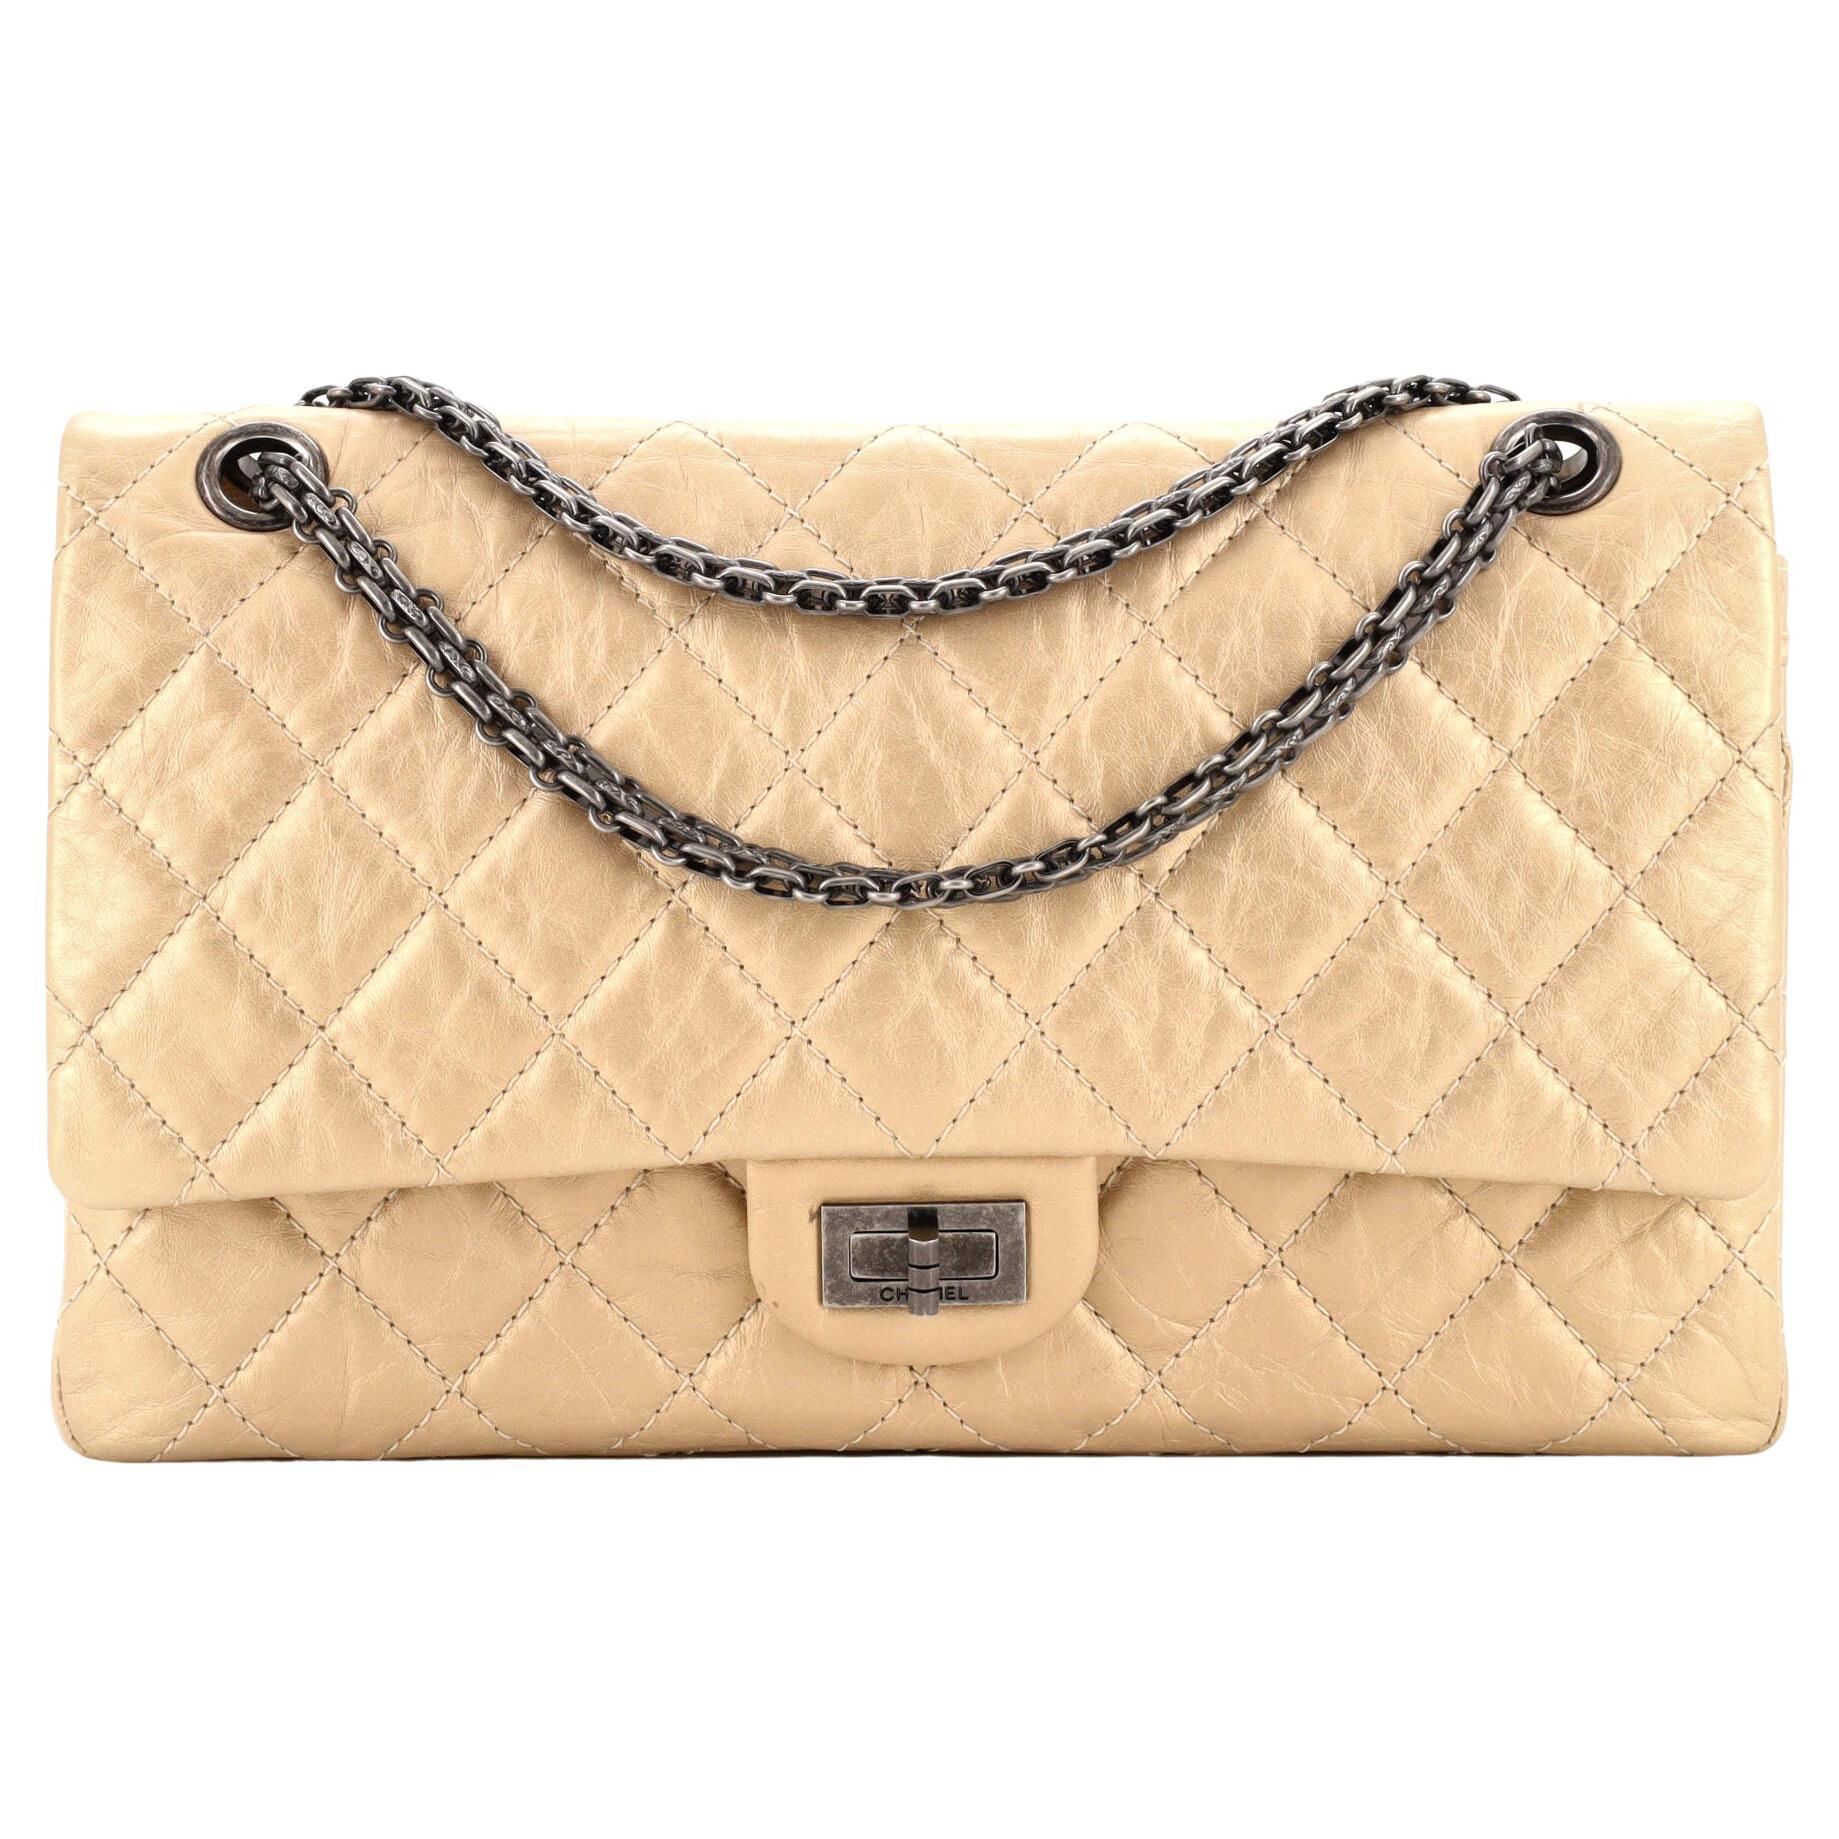 Chanel - 2.55 Re-issue Flap Bag - 226 - Gold Hardware - Black Calfskin